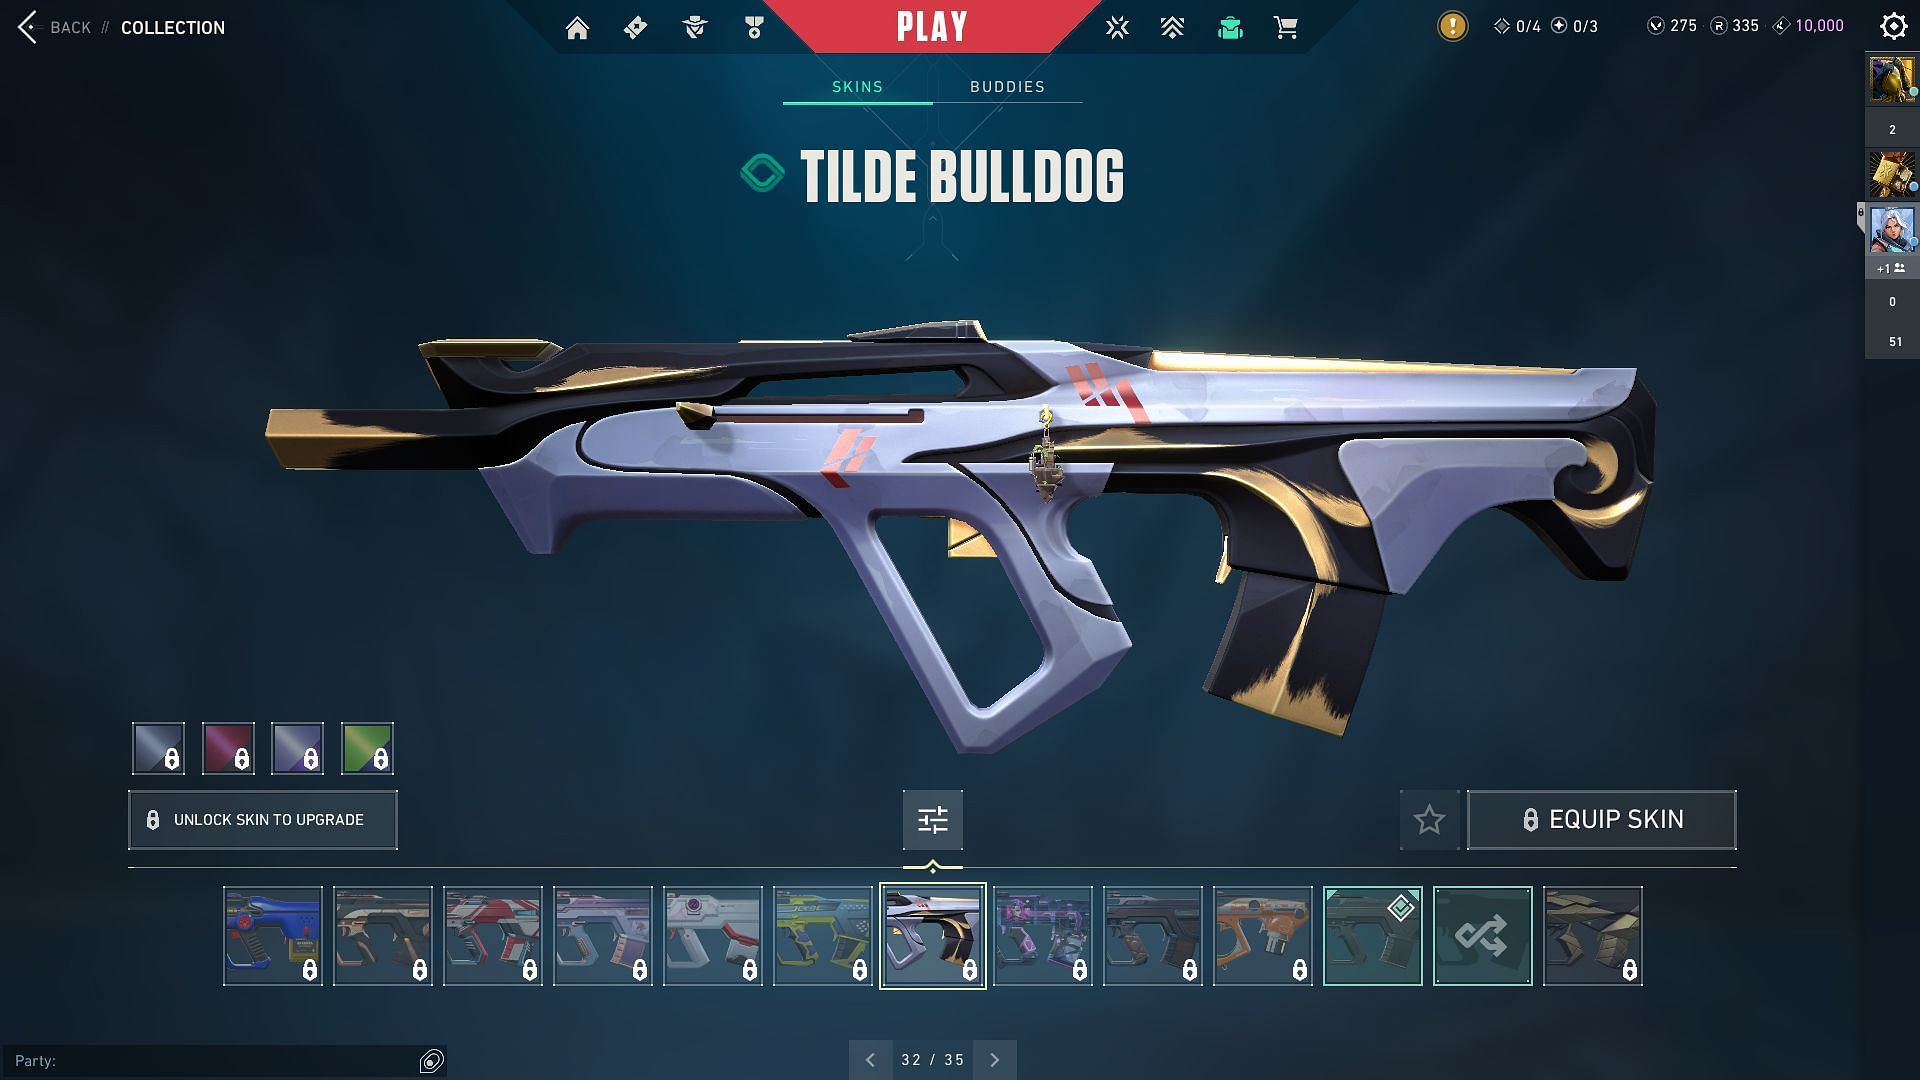 Tilde Bulldog (Image via Sportskeeda and Riot Games)